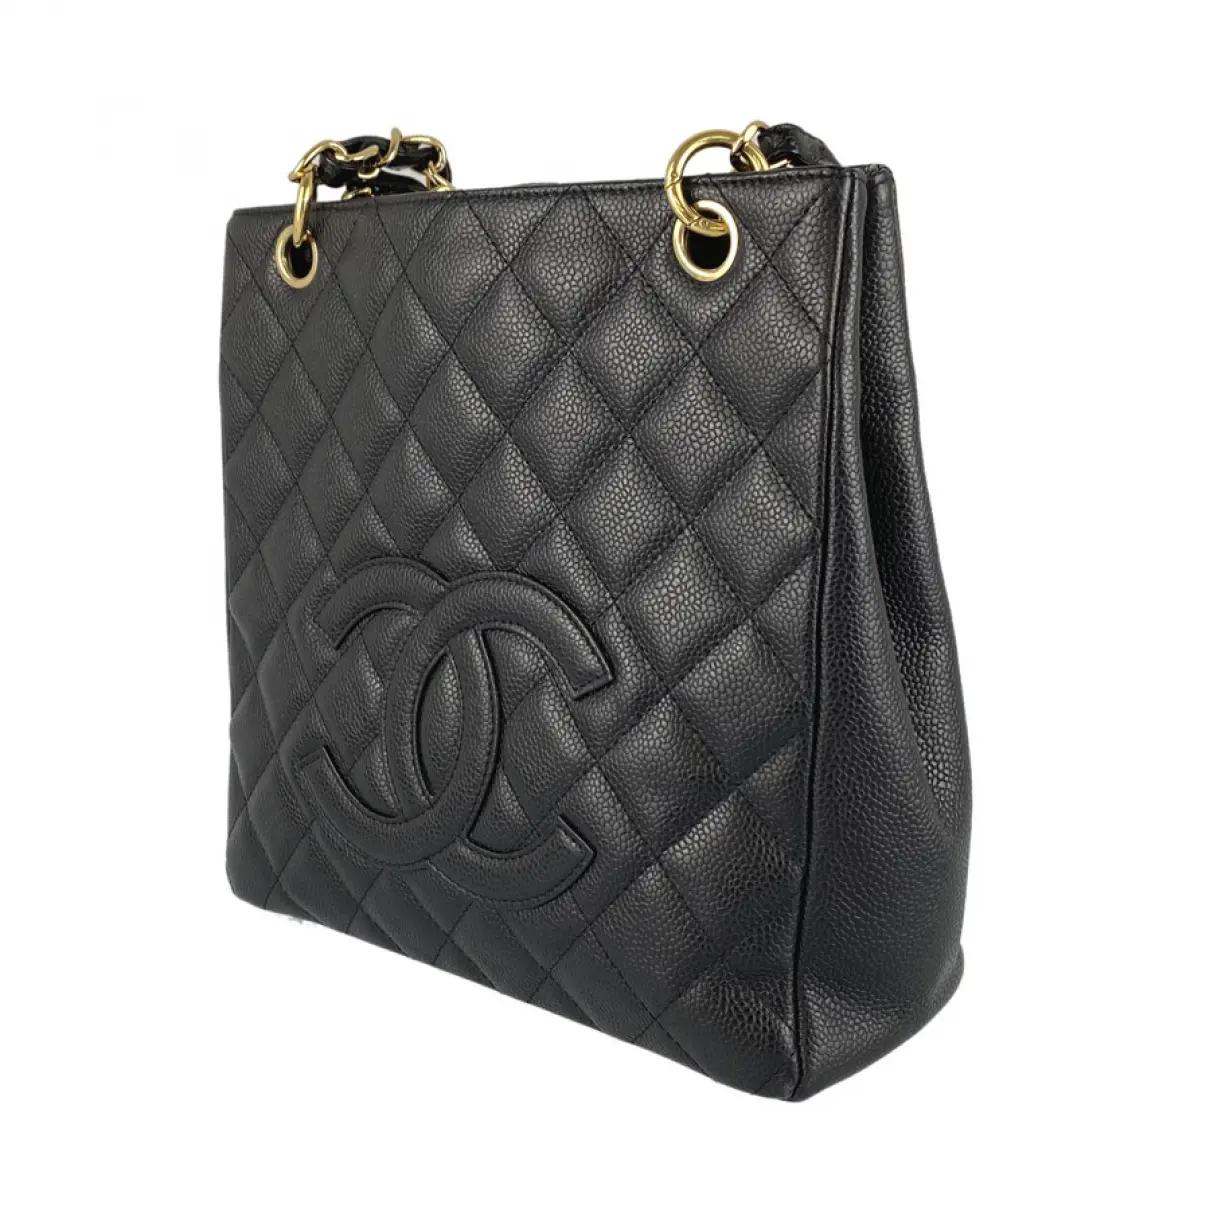 Buy Chanel Petite Shopping Tote leather handbag online - Vintage